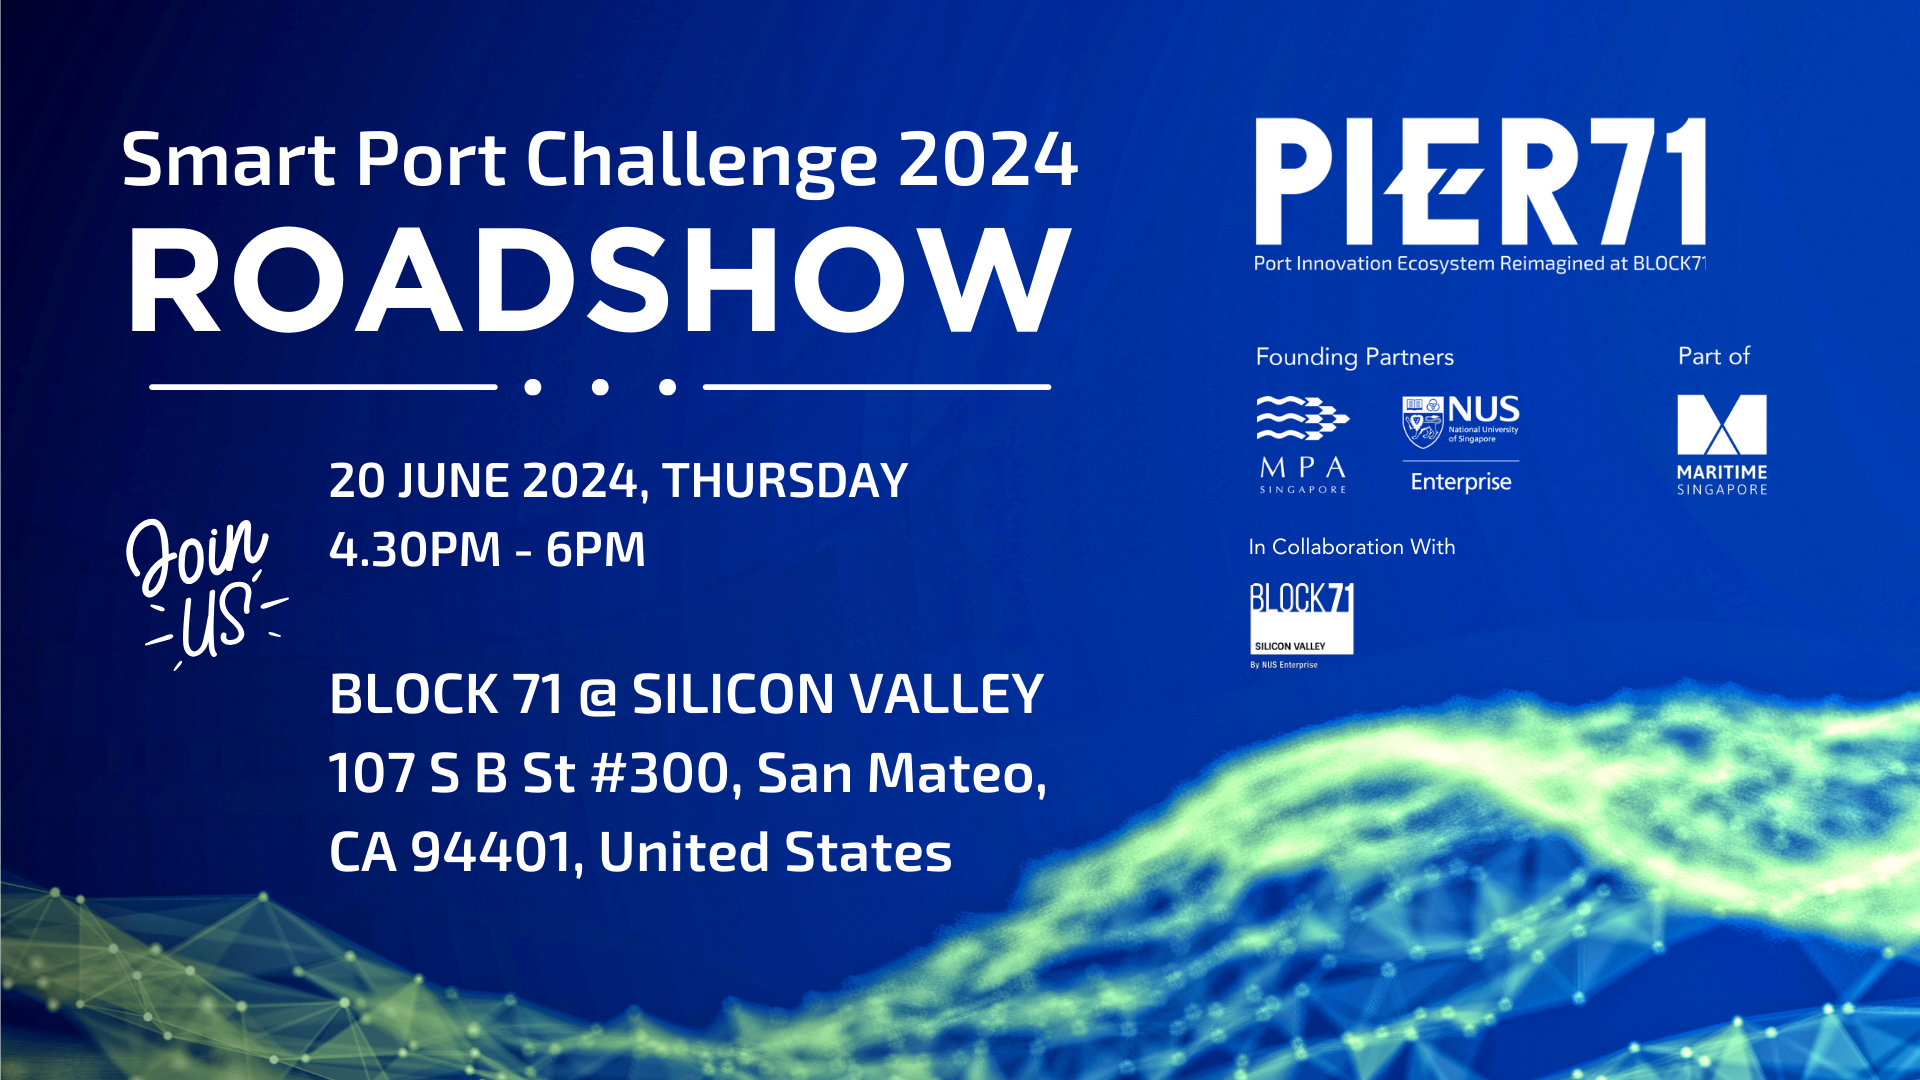 PIER71™ Smart Port Challenge 2024 Roadshow: Silicon Valley